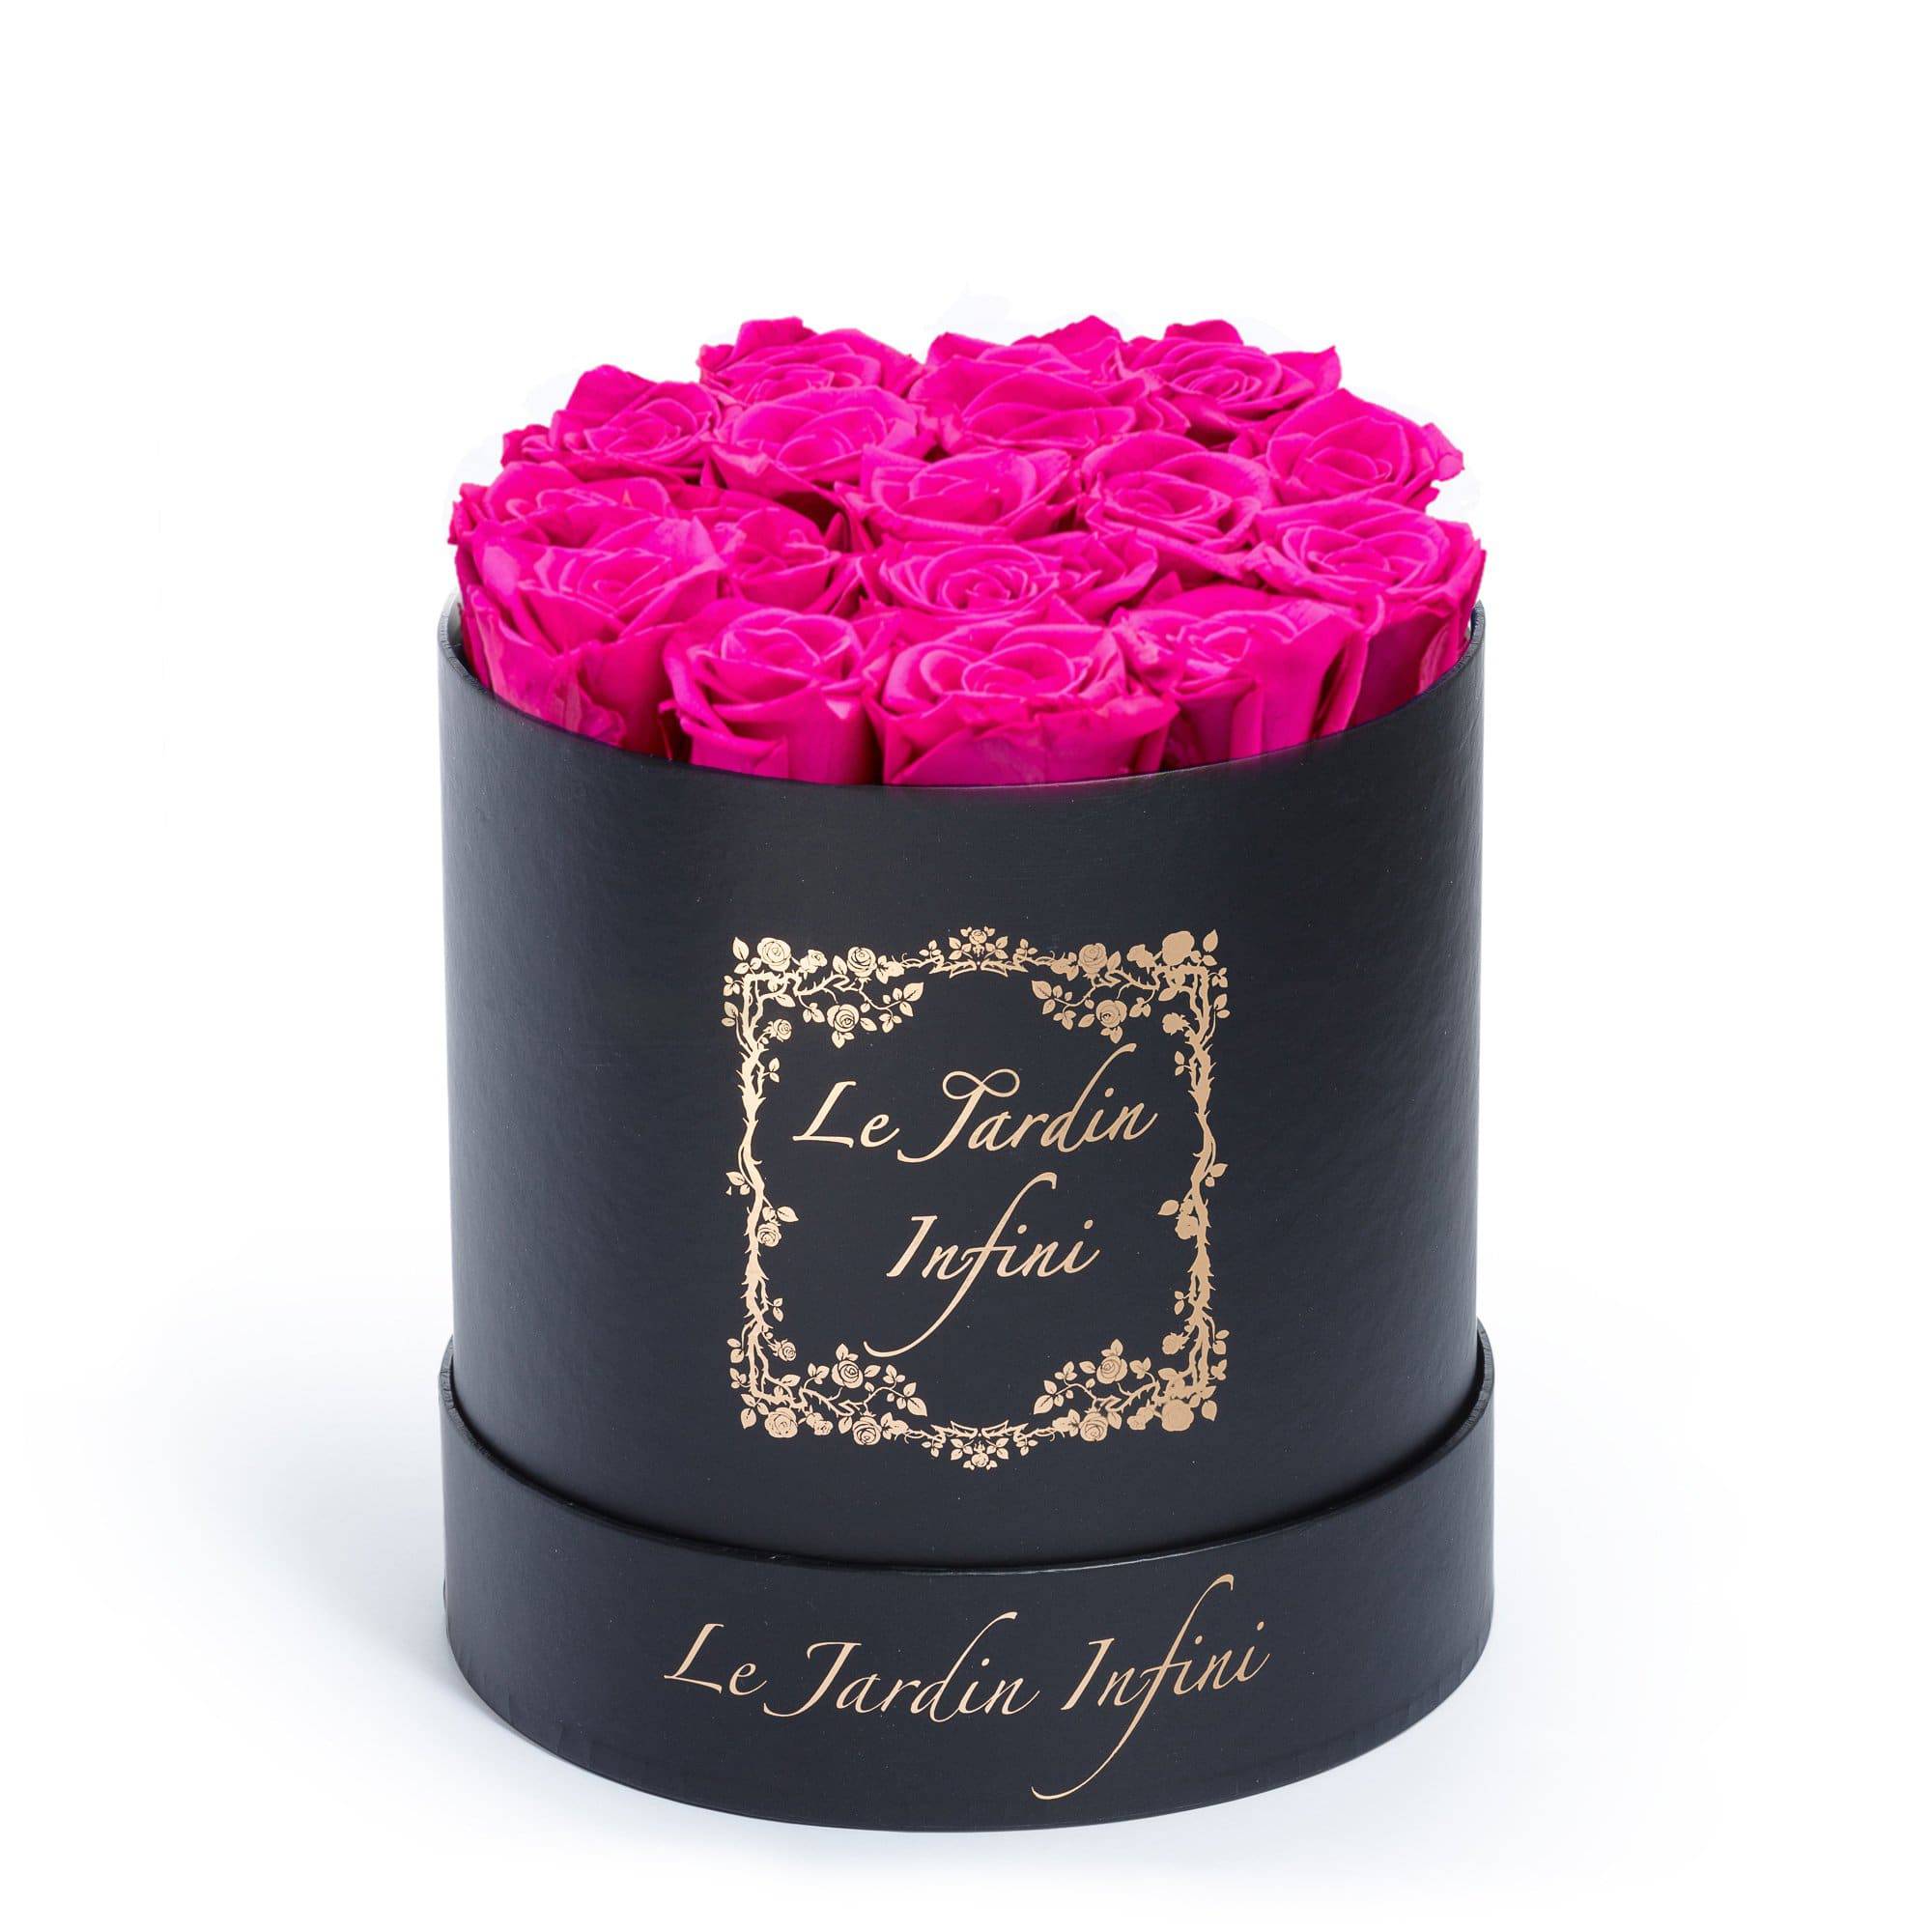 Hot Pink Preserved Roses - Medium Round Black Box - Le Jardin Infini Roses in a Box